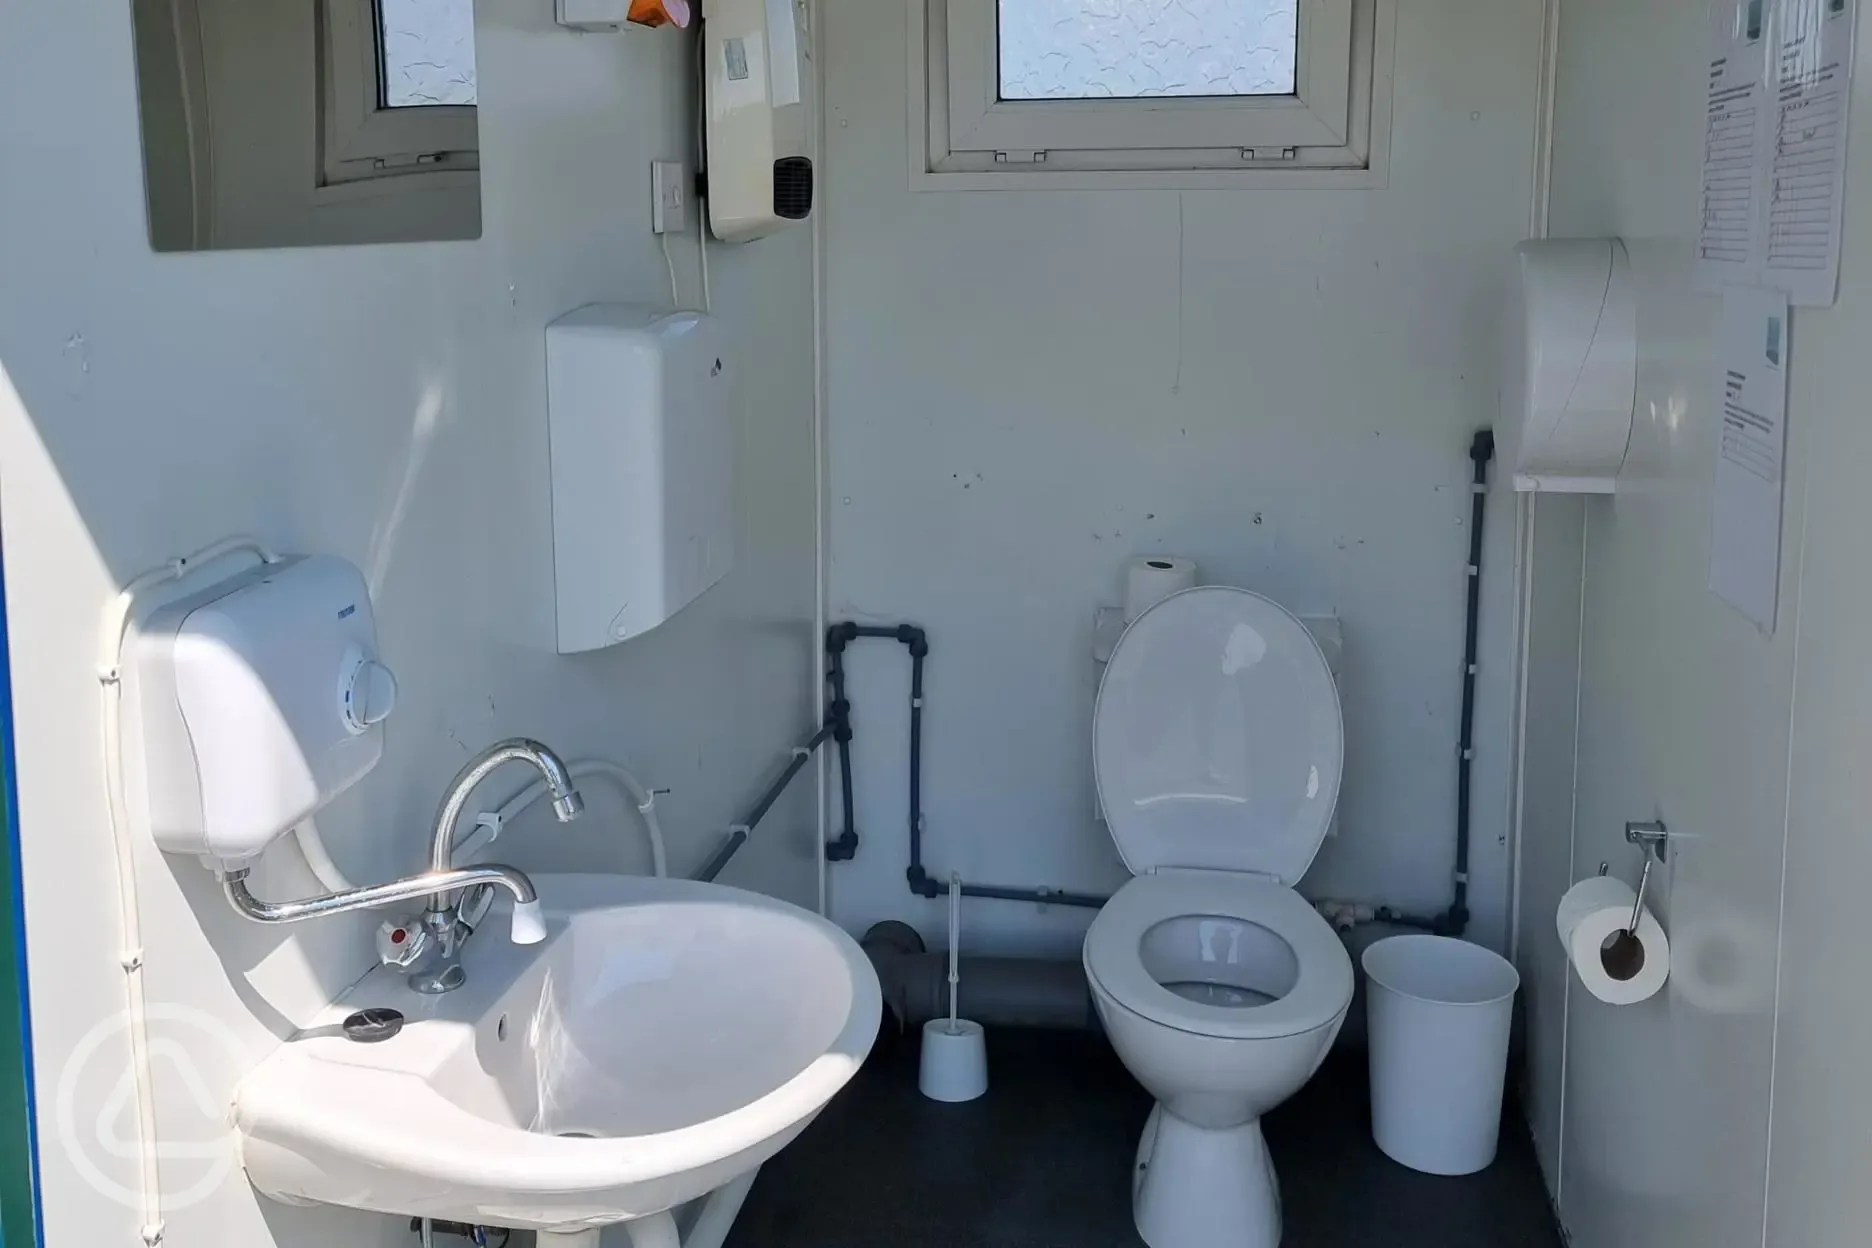 Campsite Toilets